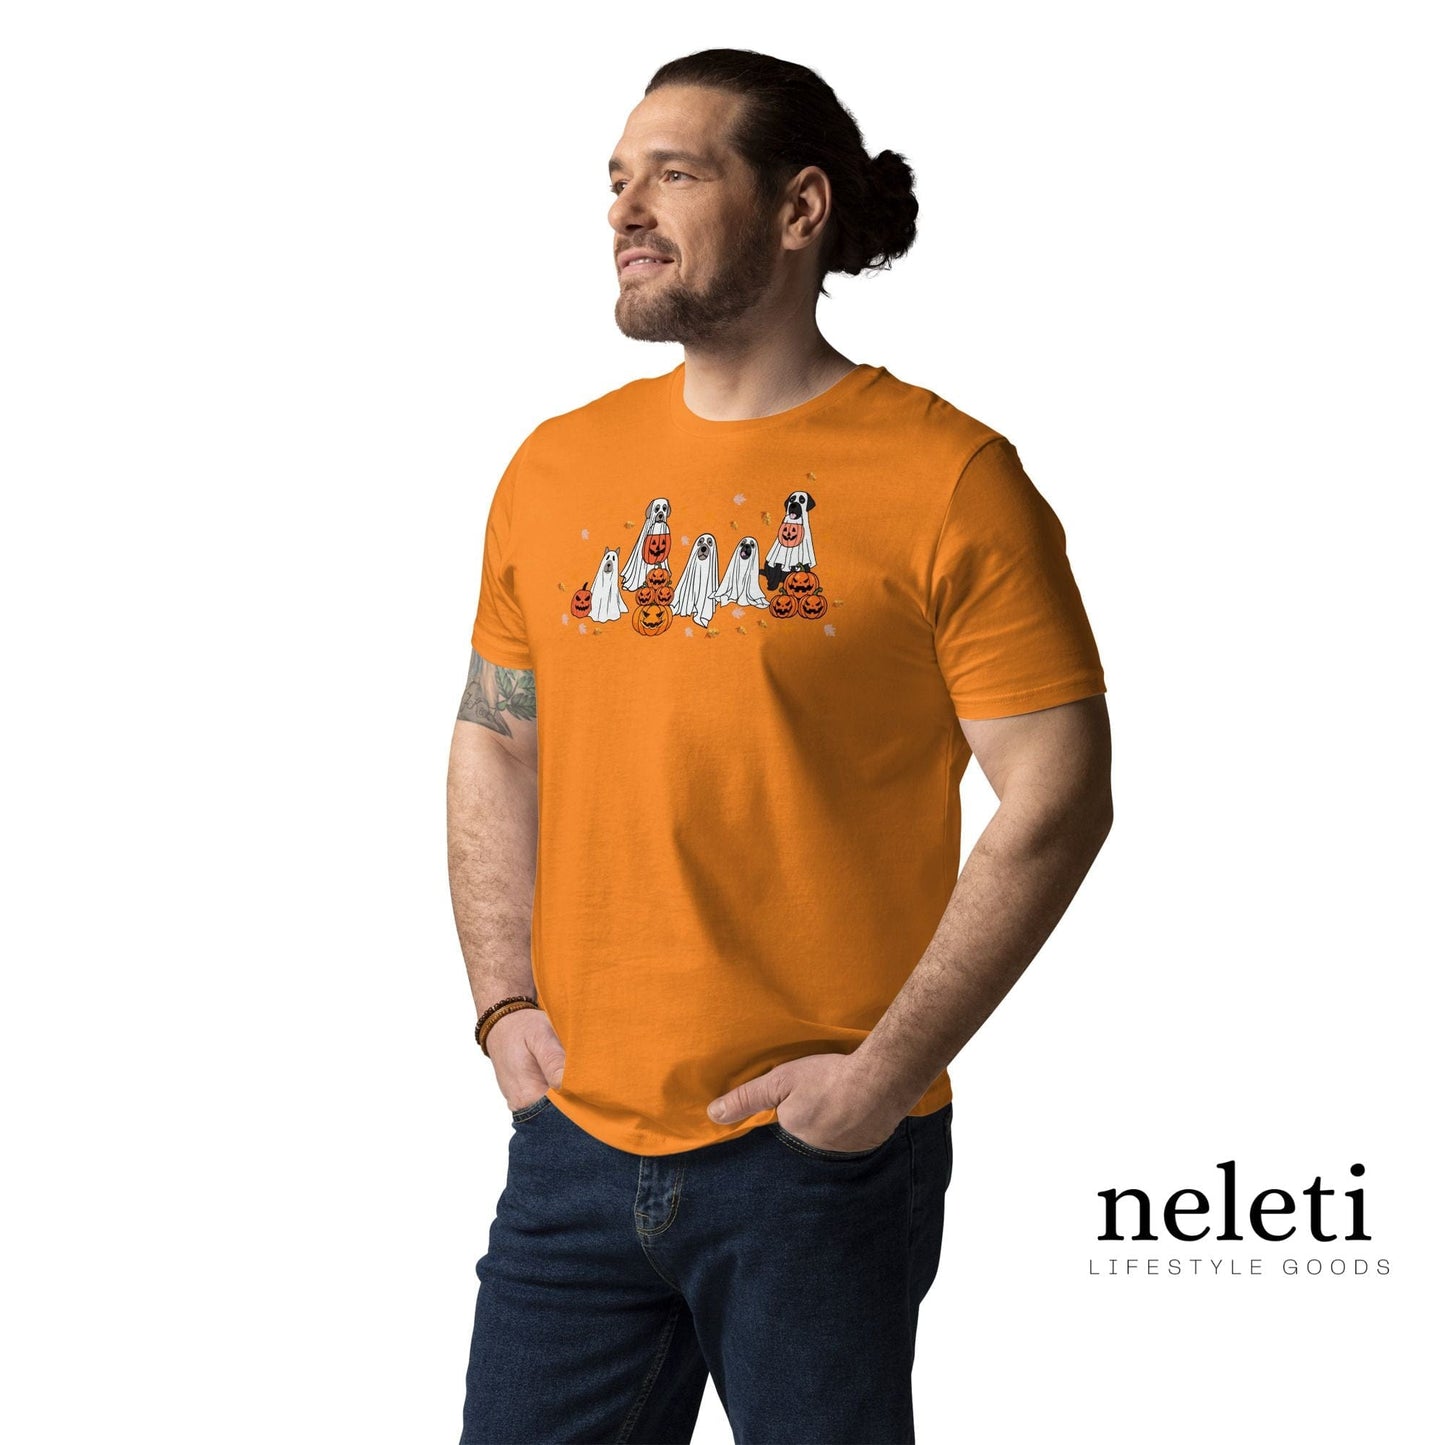 neleti.com-haloween-orange-shirt-for-dog-lovers